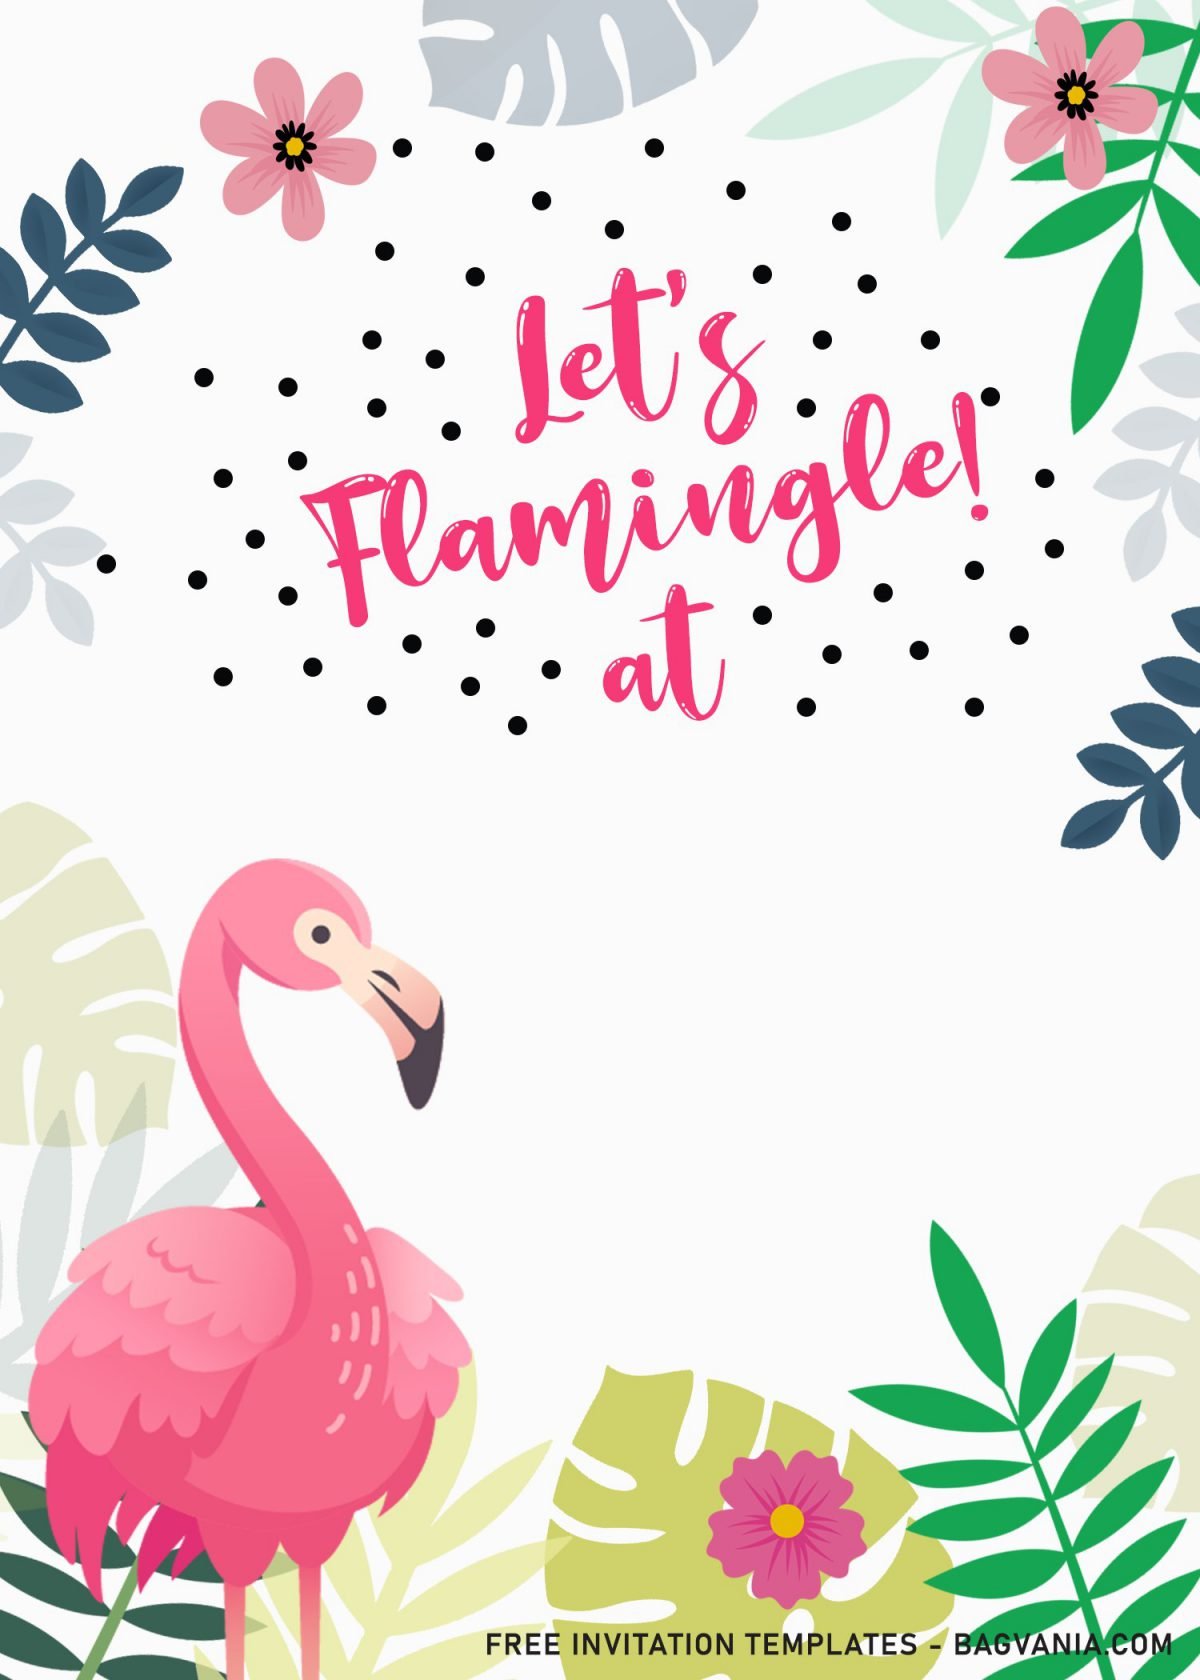 8+ Adorable Flamingle Flamingo Themed Birthday Invitation Templates and has cute polka dot pattern